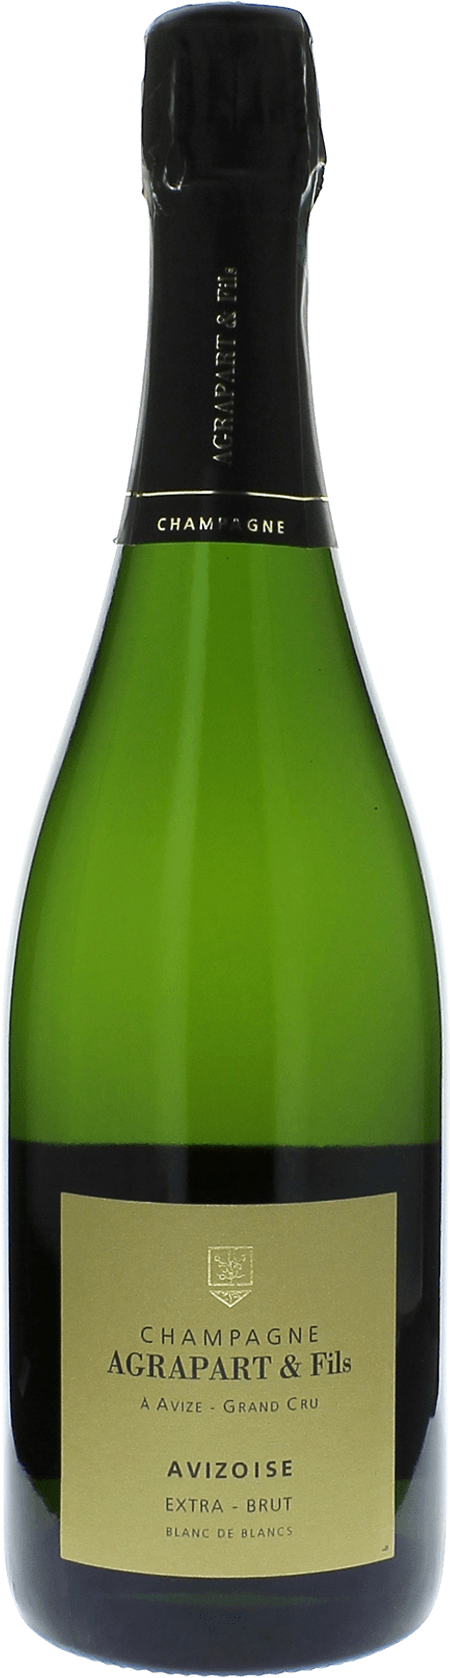 Agrapart  avizoise extra brut blanc de blancs 2013  Agrapart, Champagne